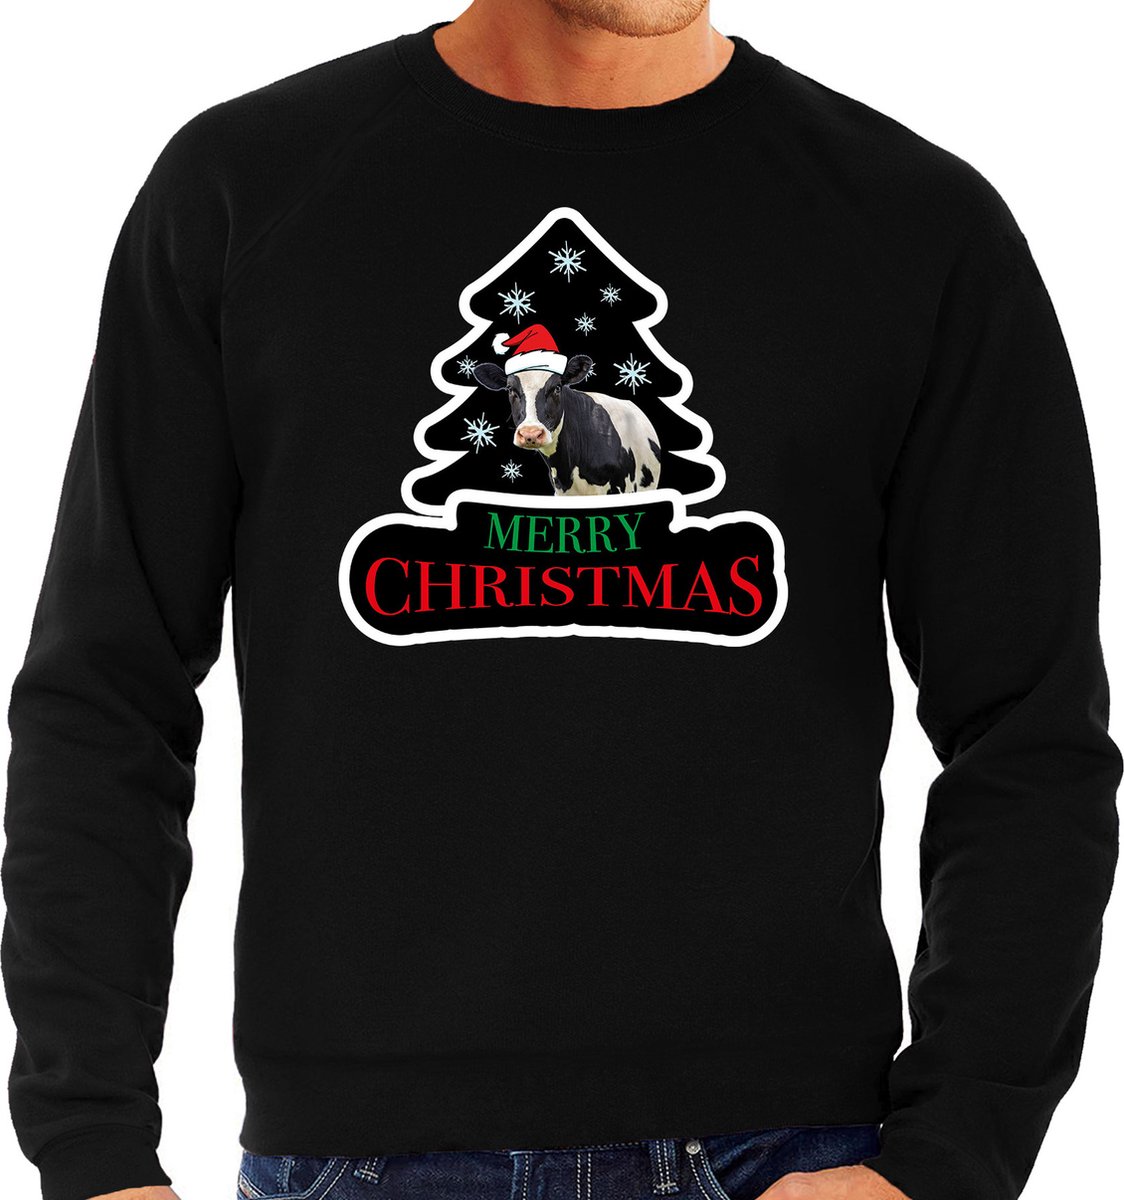 Dieren kersttrui koe zwart heren - Foute koeien kerstsweater - Kerst outfit dieren liefhebber XXL